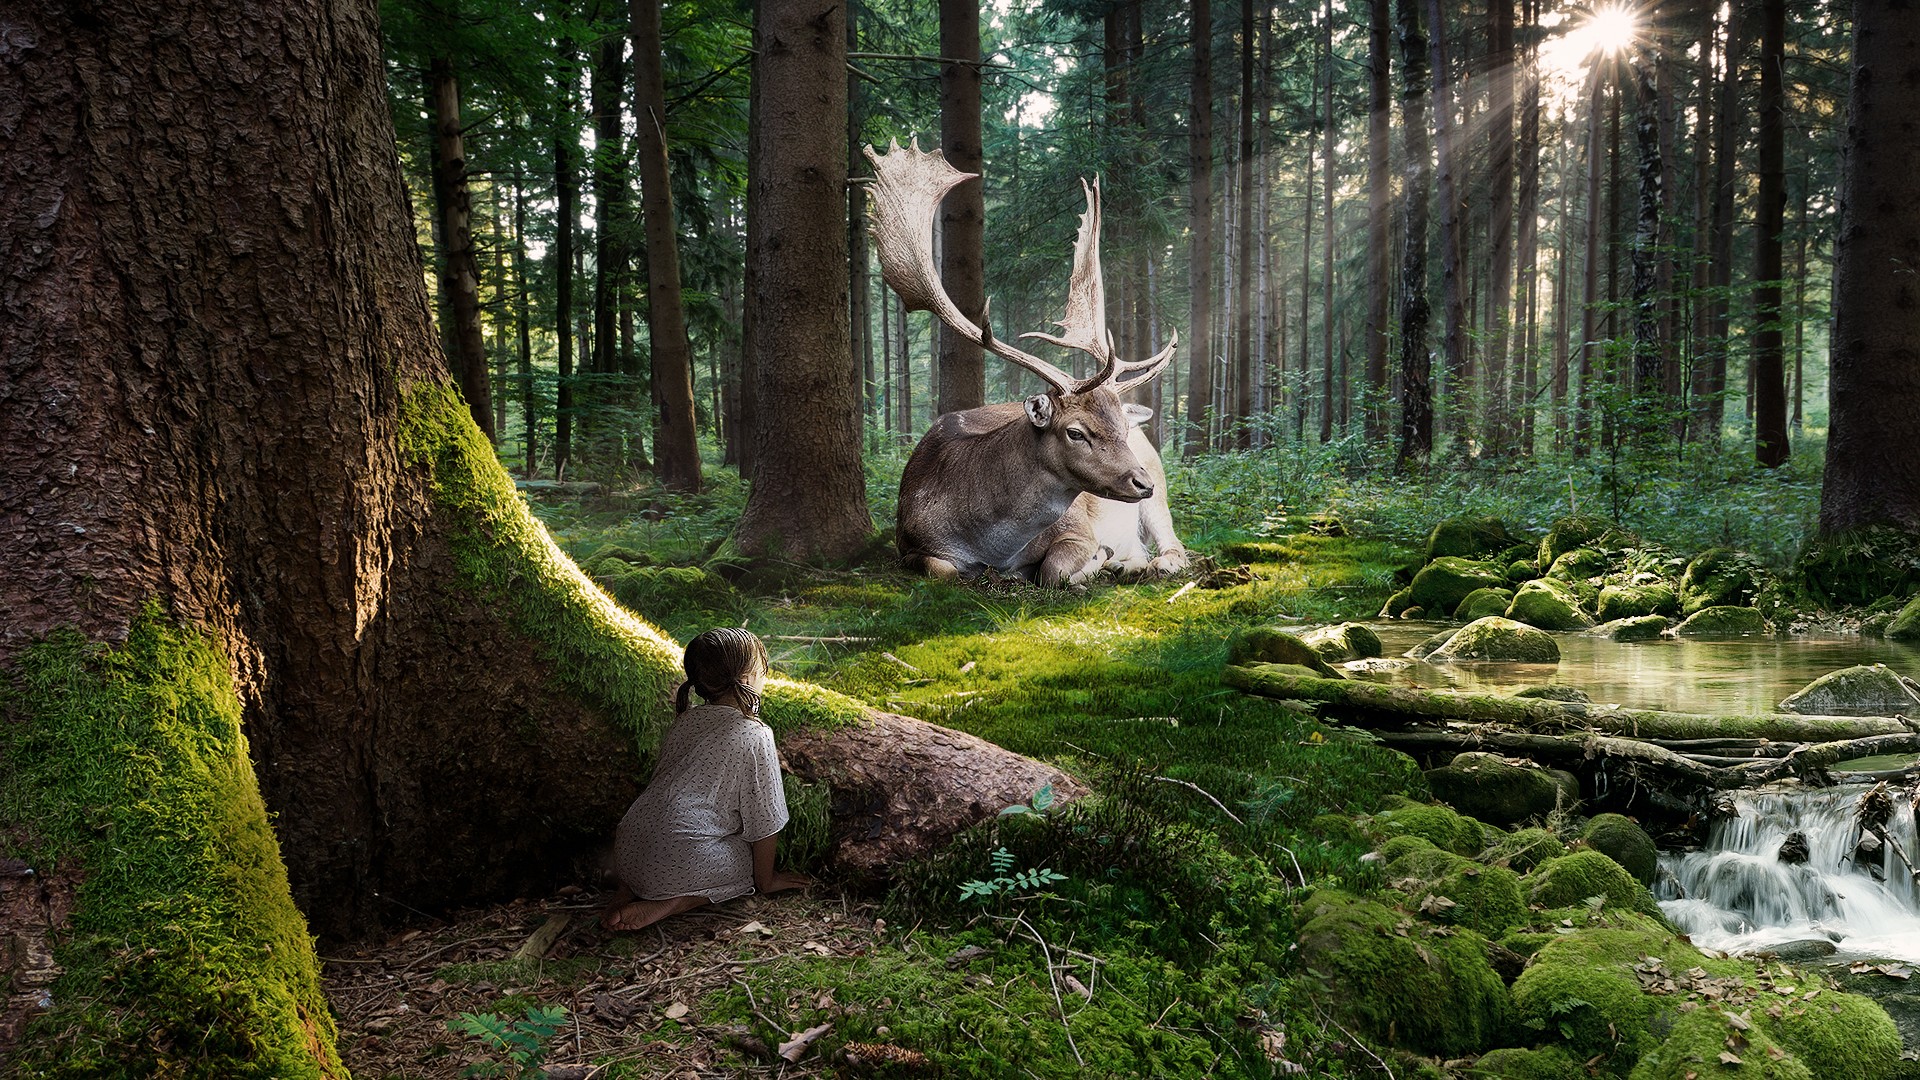 photography, manipulation, cgi, child, cute, elk, forest